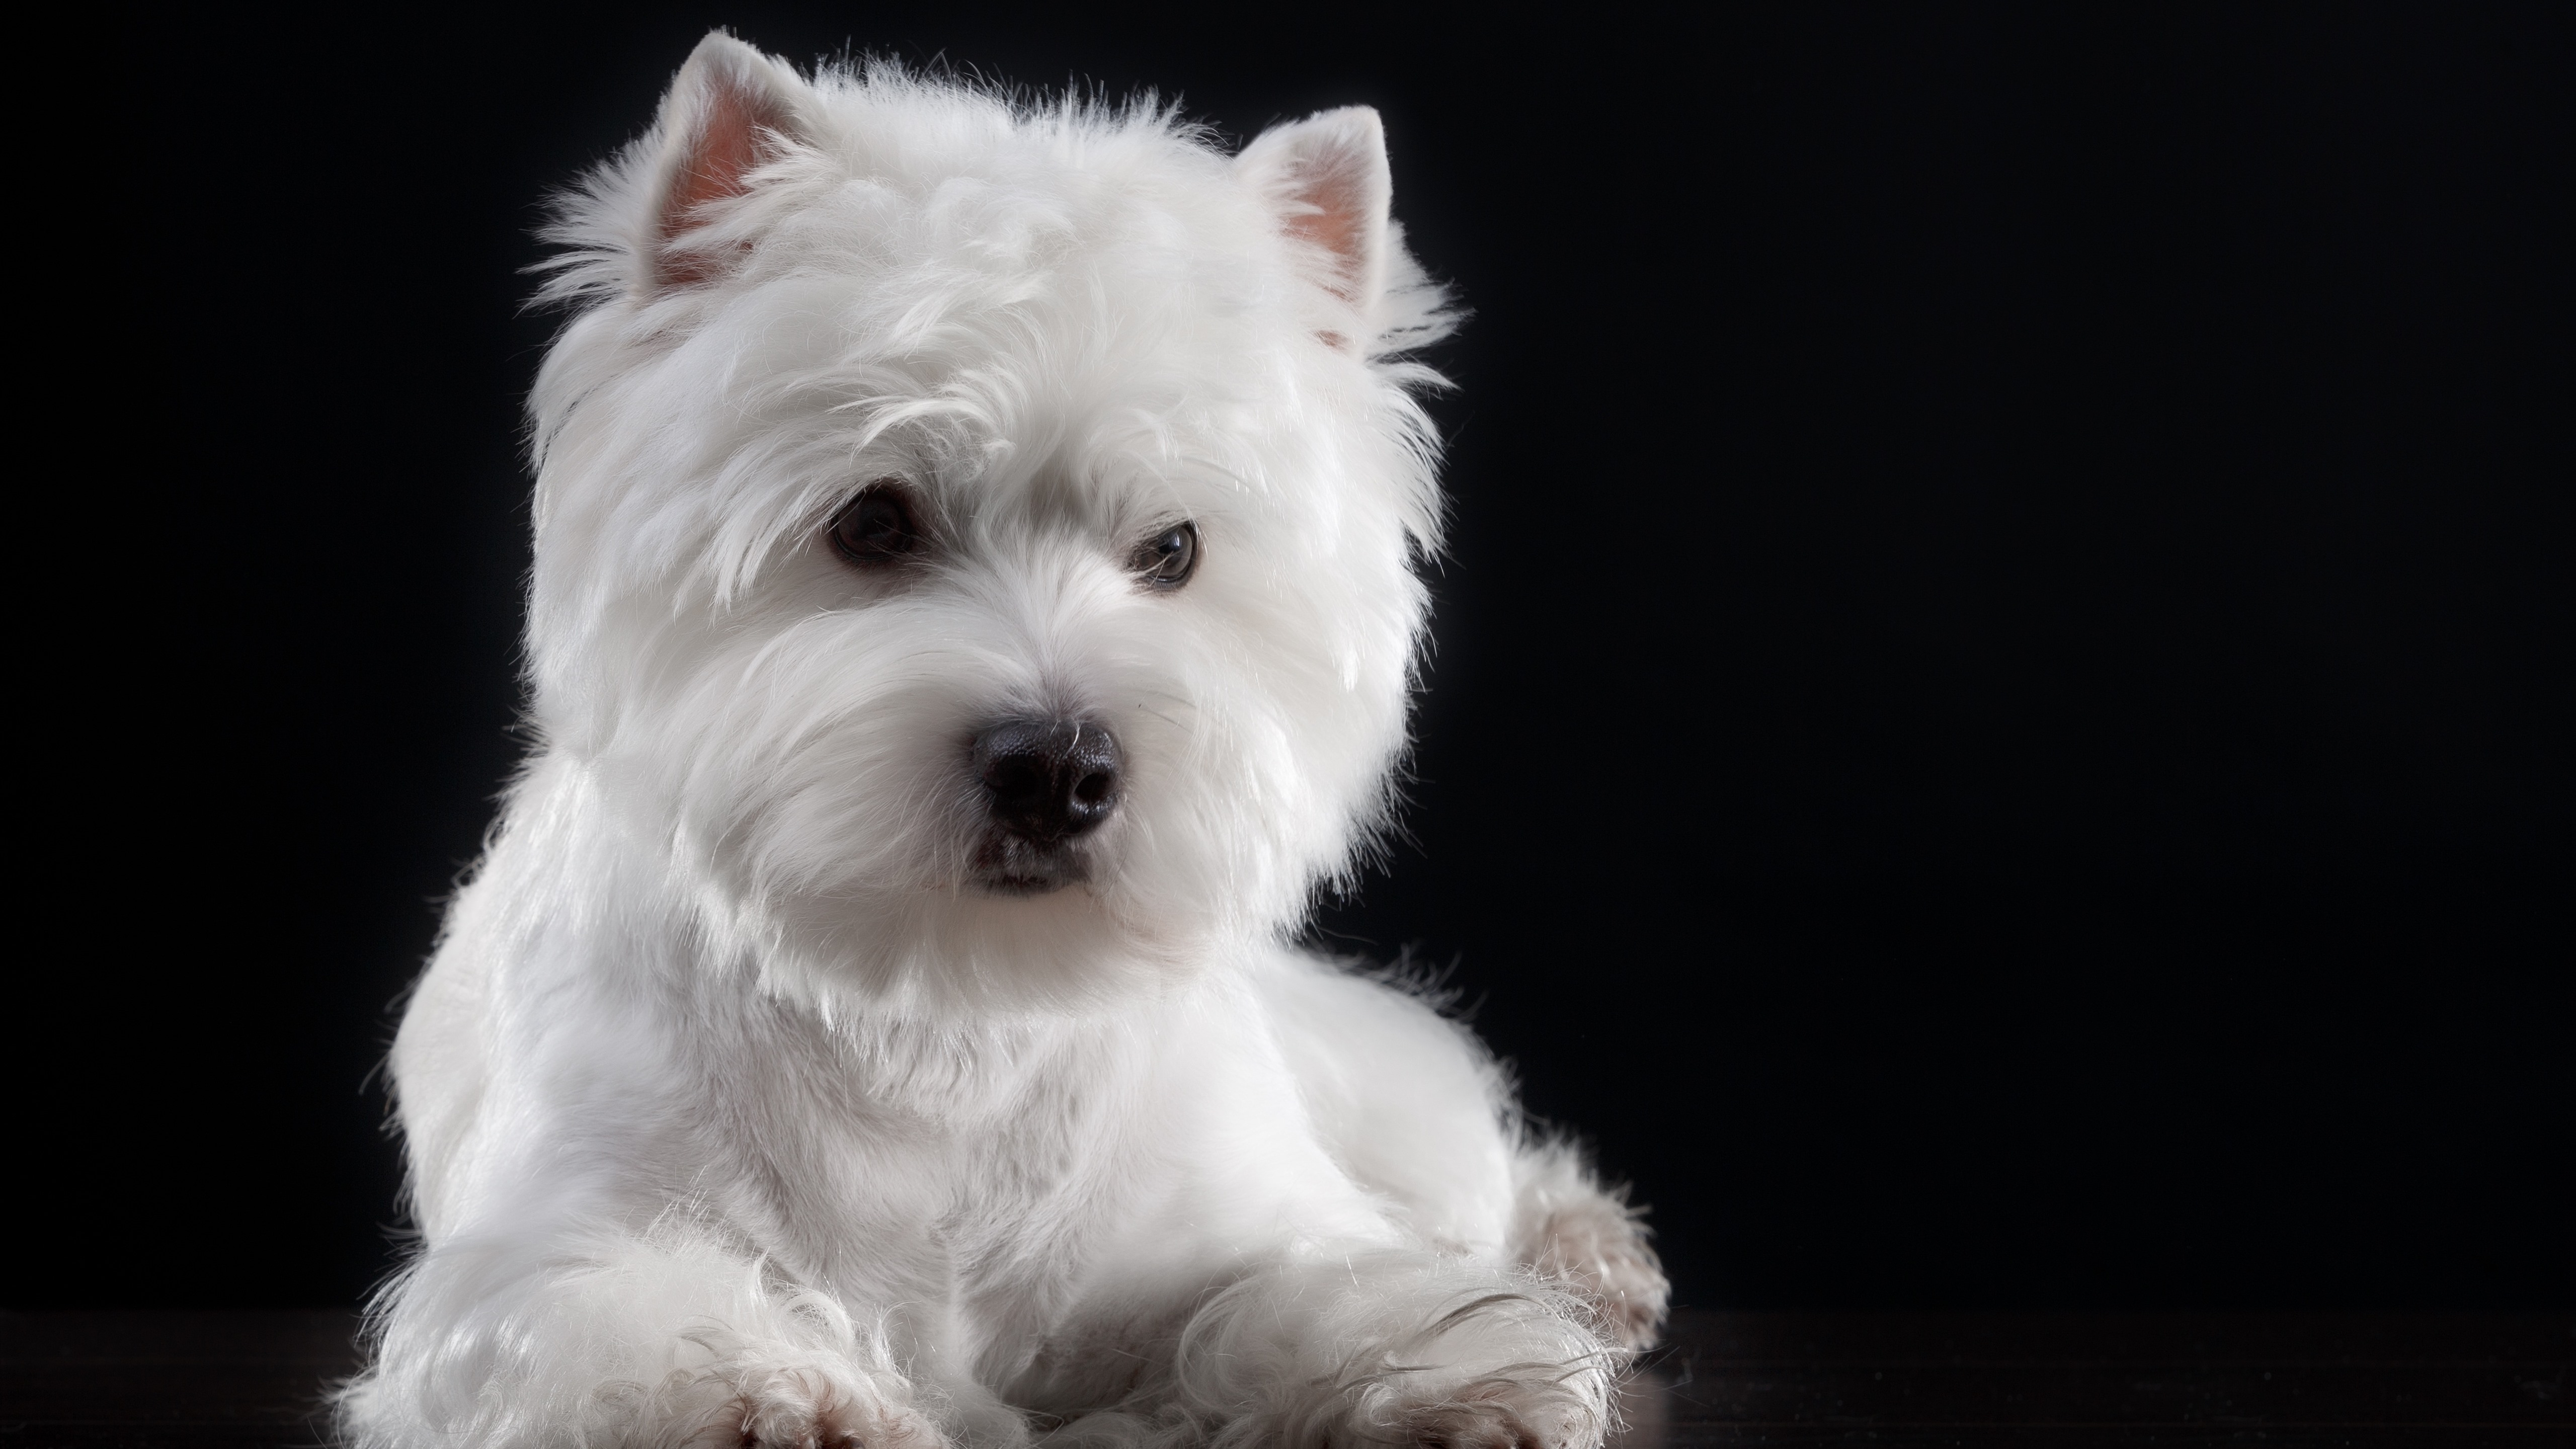 Wallpaper Furry White Dog, Black Background - West Highland White Terrier - HD Wallpaper 